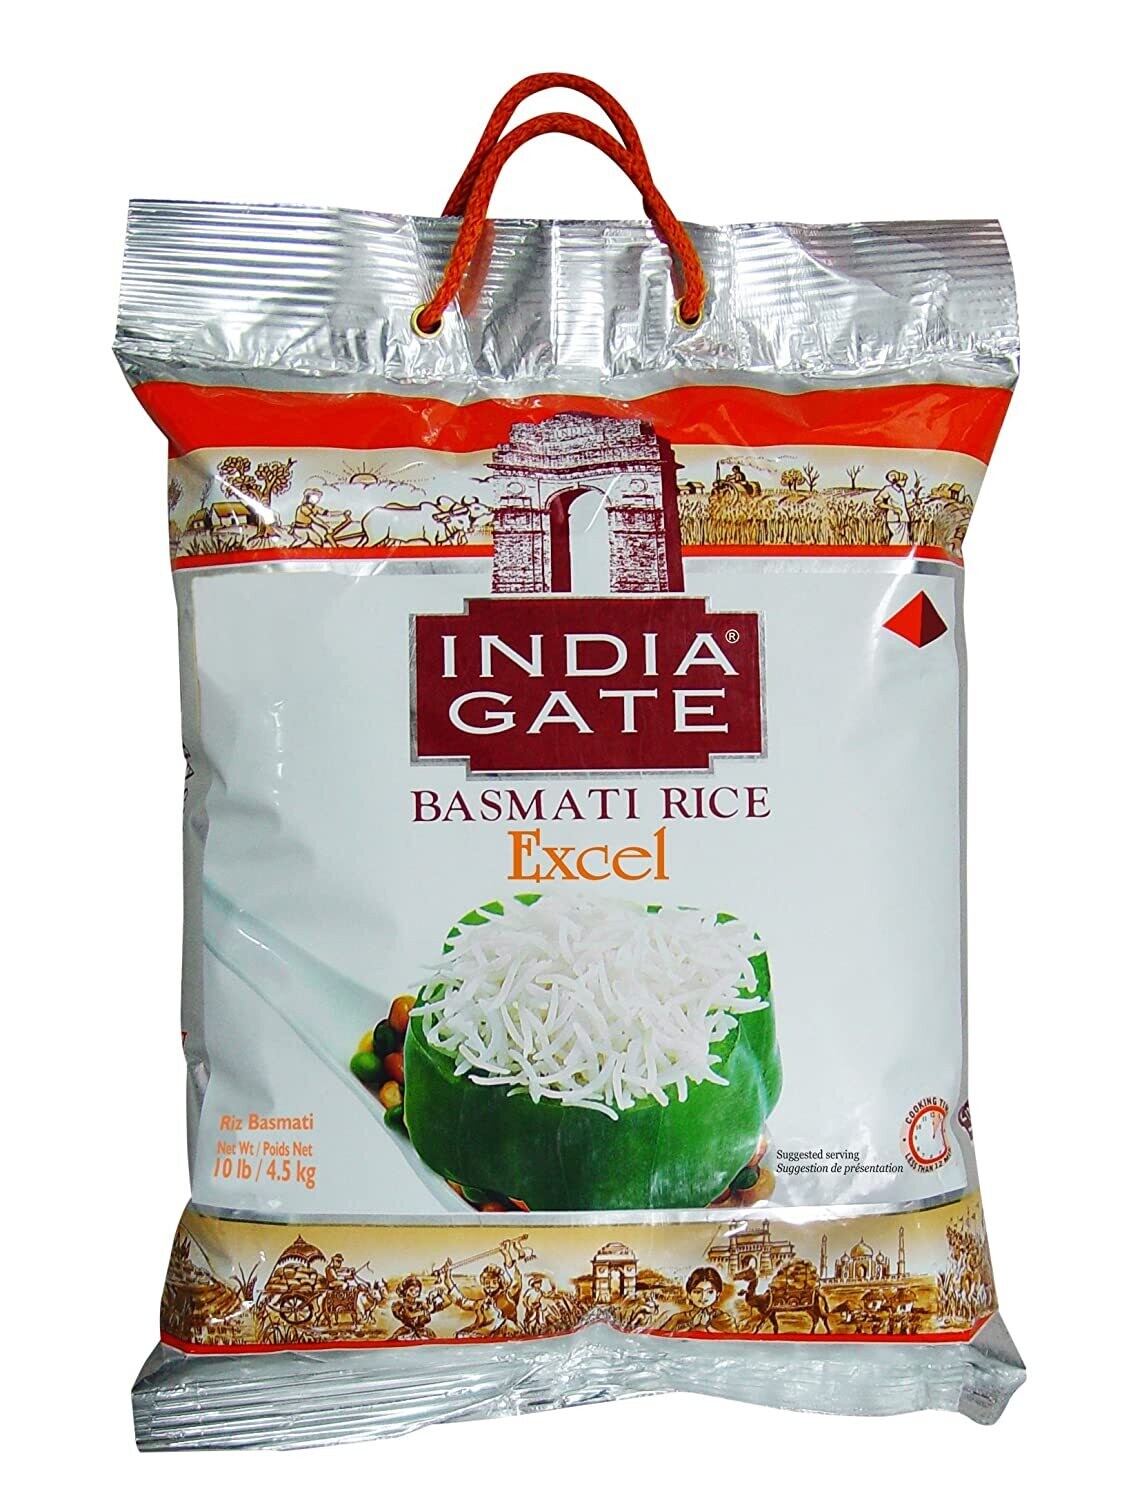 India Gate Basmati Rice Excel 5kg